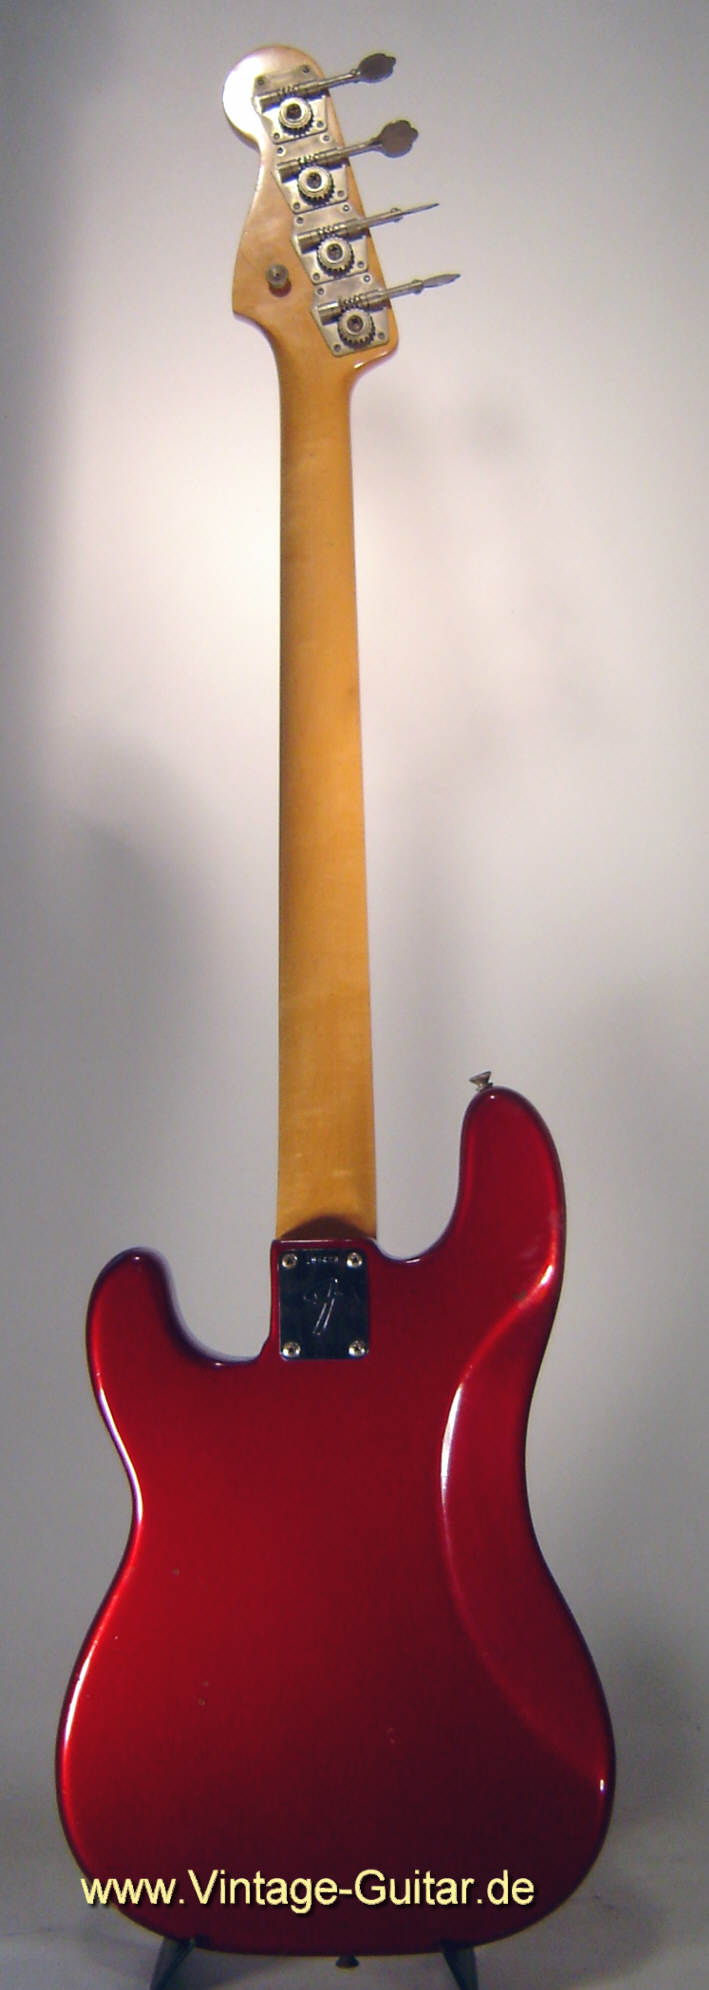 Fender-Precision_CAR_1966-2.jpg